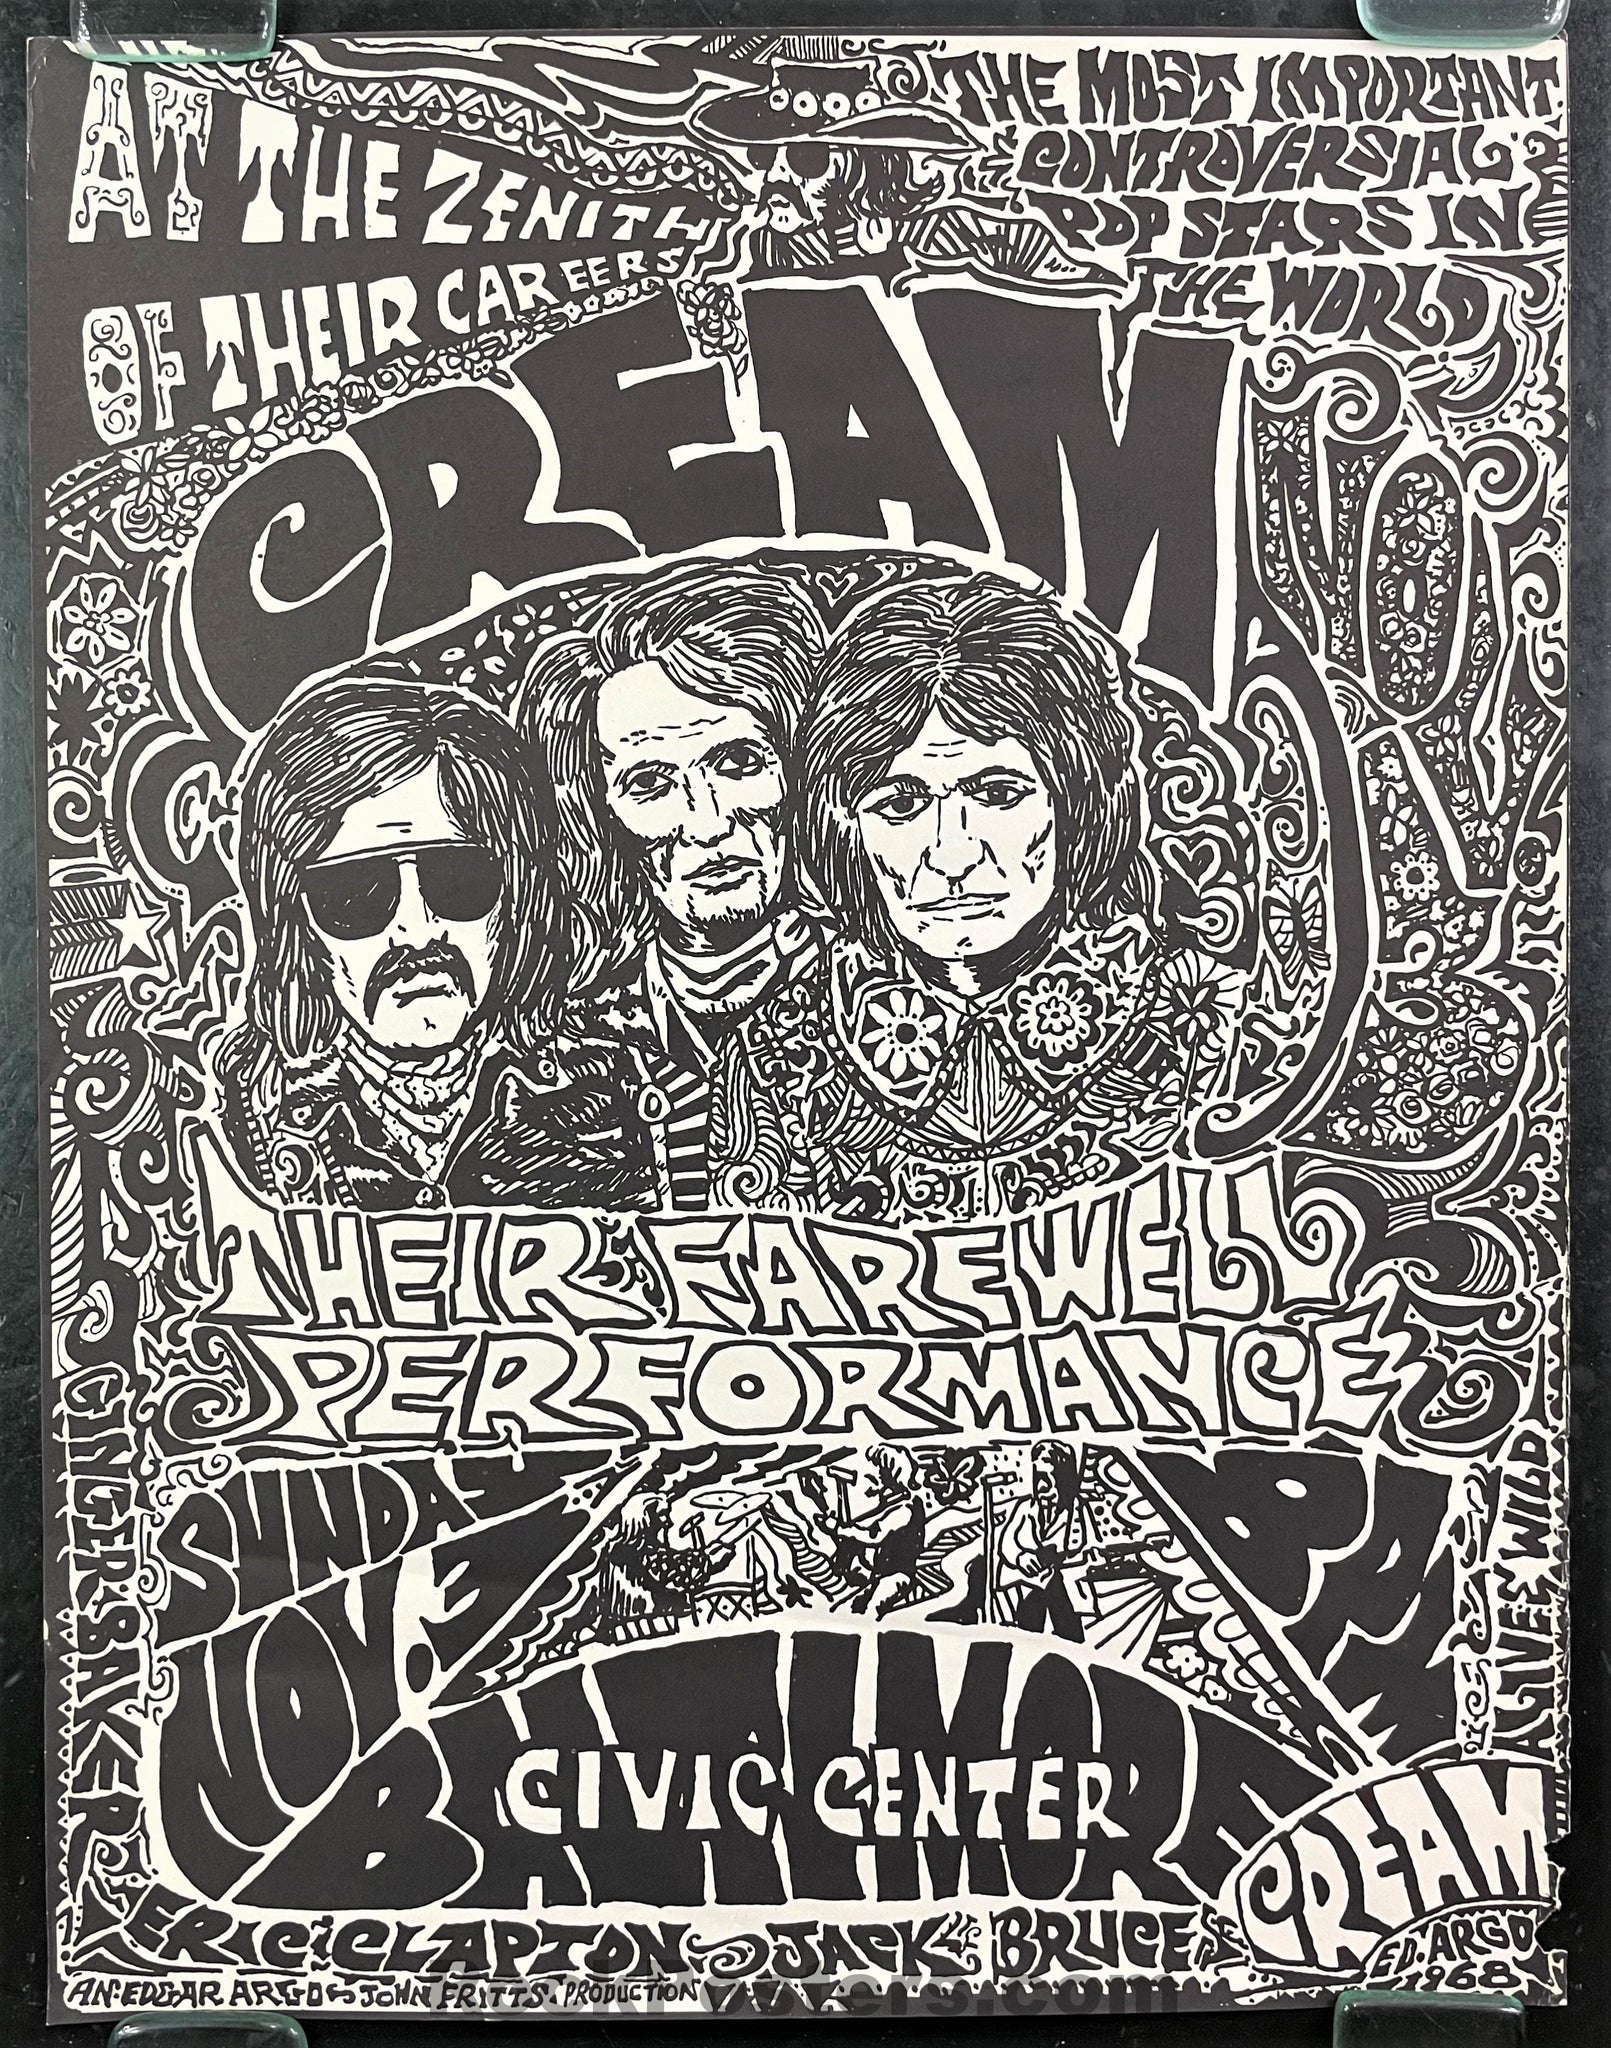 AUCTION - Cream - Farewell Performance - 1968 Concert Poster - Baltimore Civic Center - Good